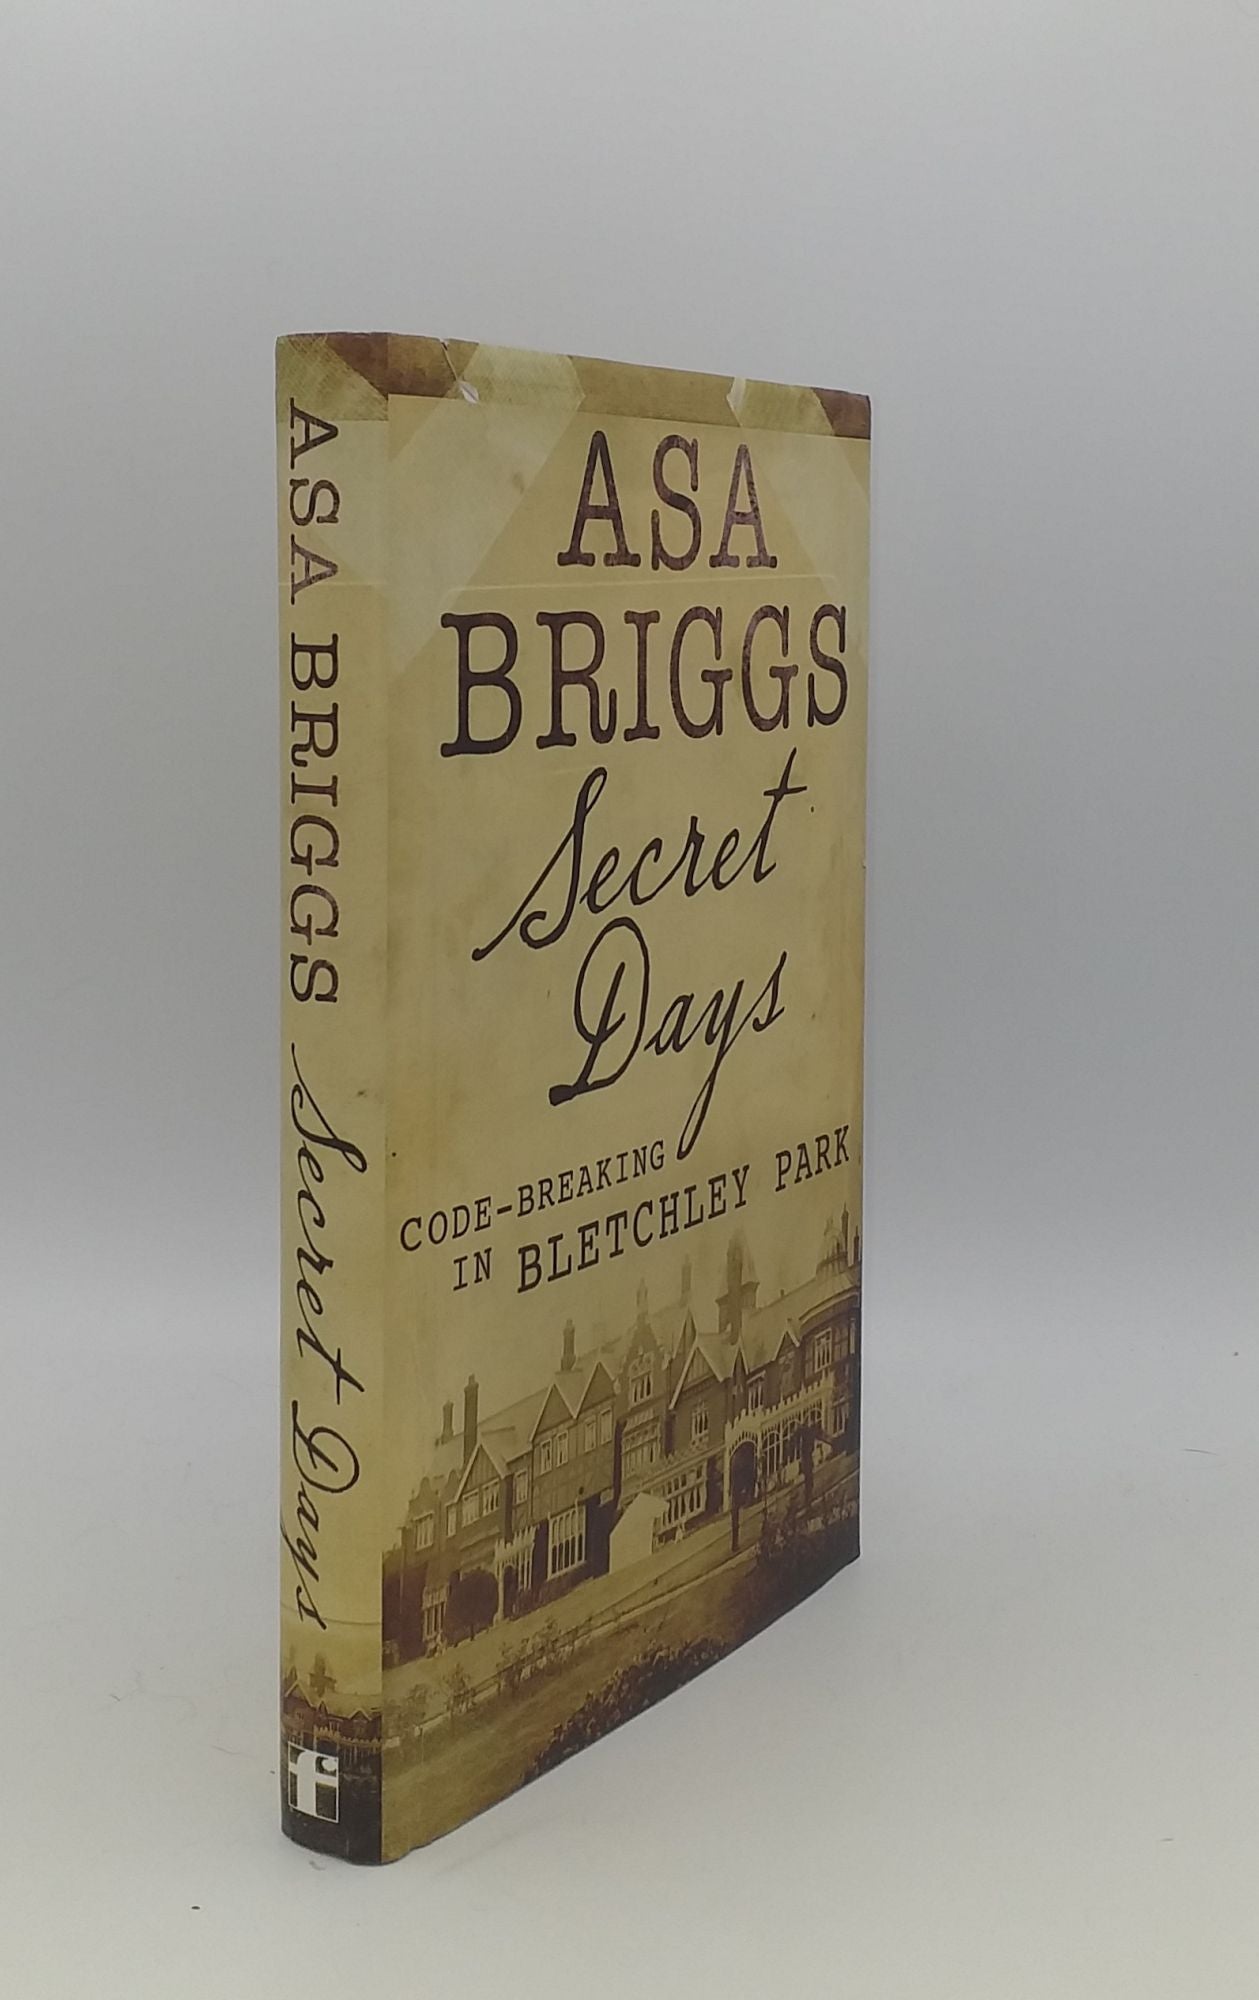 BRIGGS Asa - Secret Days Code-Breaking in Bletchley Park